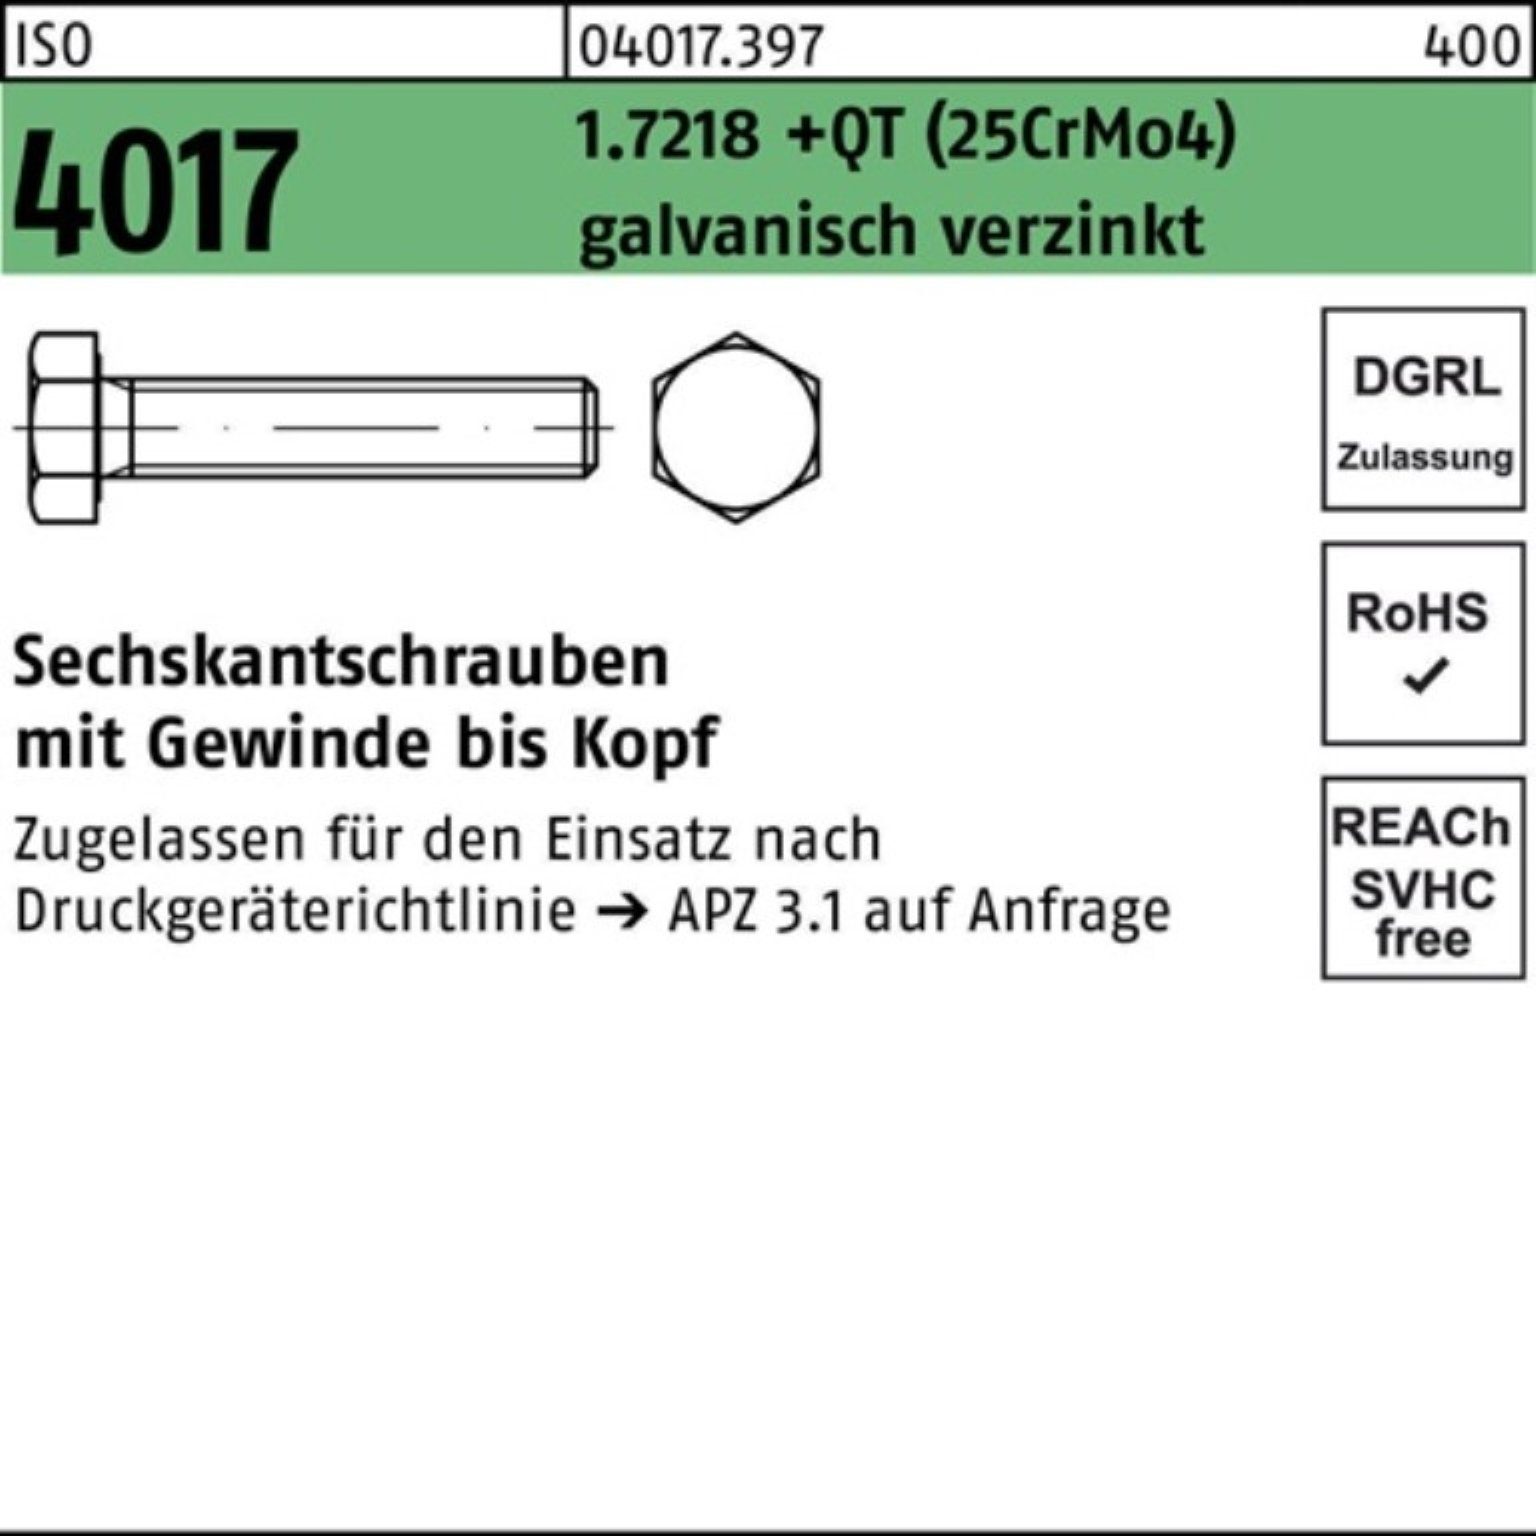 Bufab g Sechskantschraube VG ISO 100er +QT (25CrMo4) 1.7218 M12x50 4017 Sechskantschraube Pack